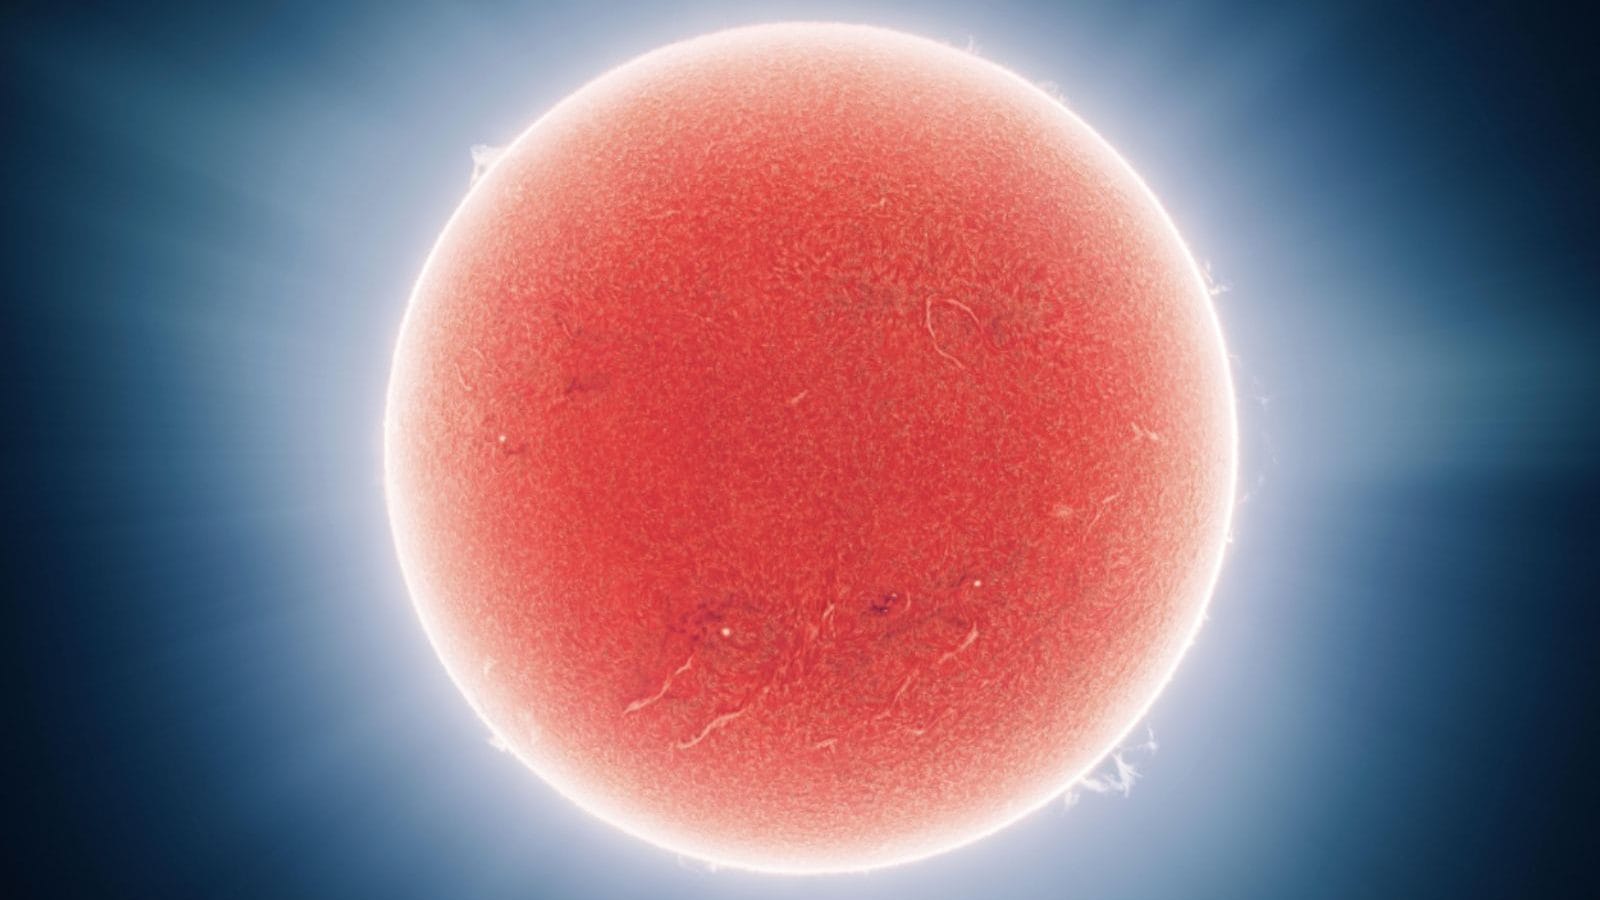 Солнце через телескоп. Плазма. Эндрю Маккарти фото солнца. Луна в телескоп фото.